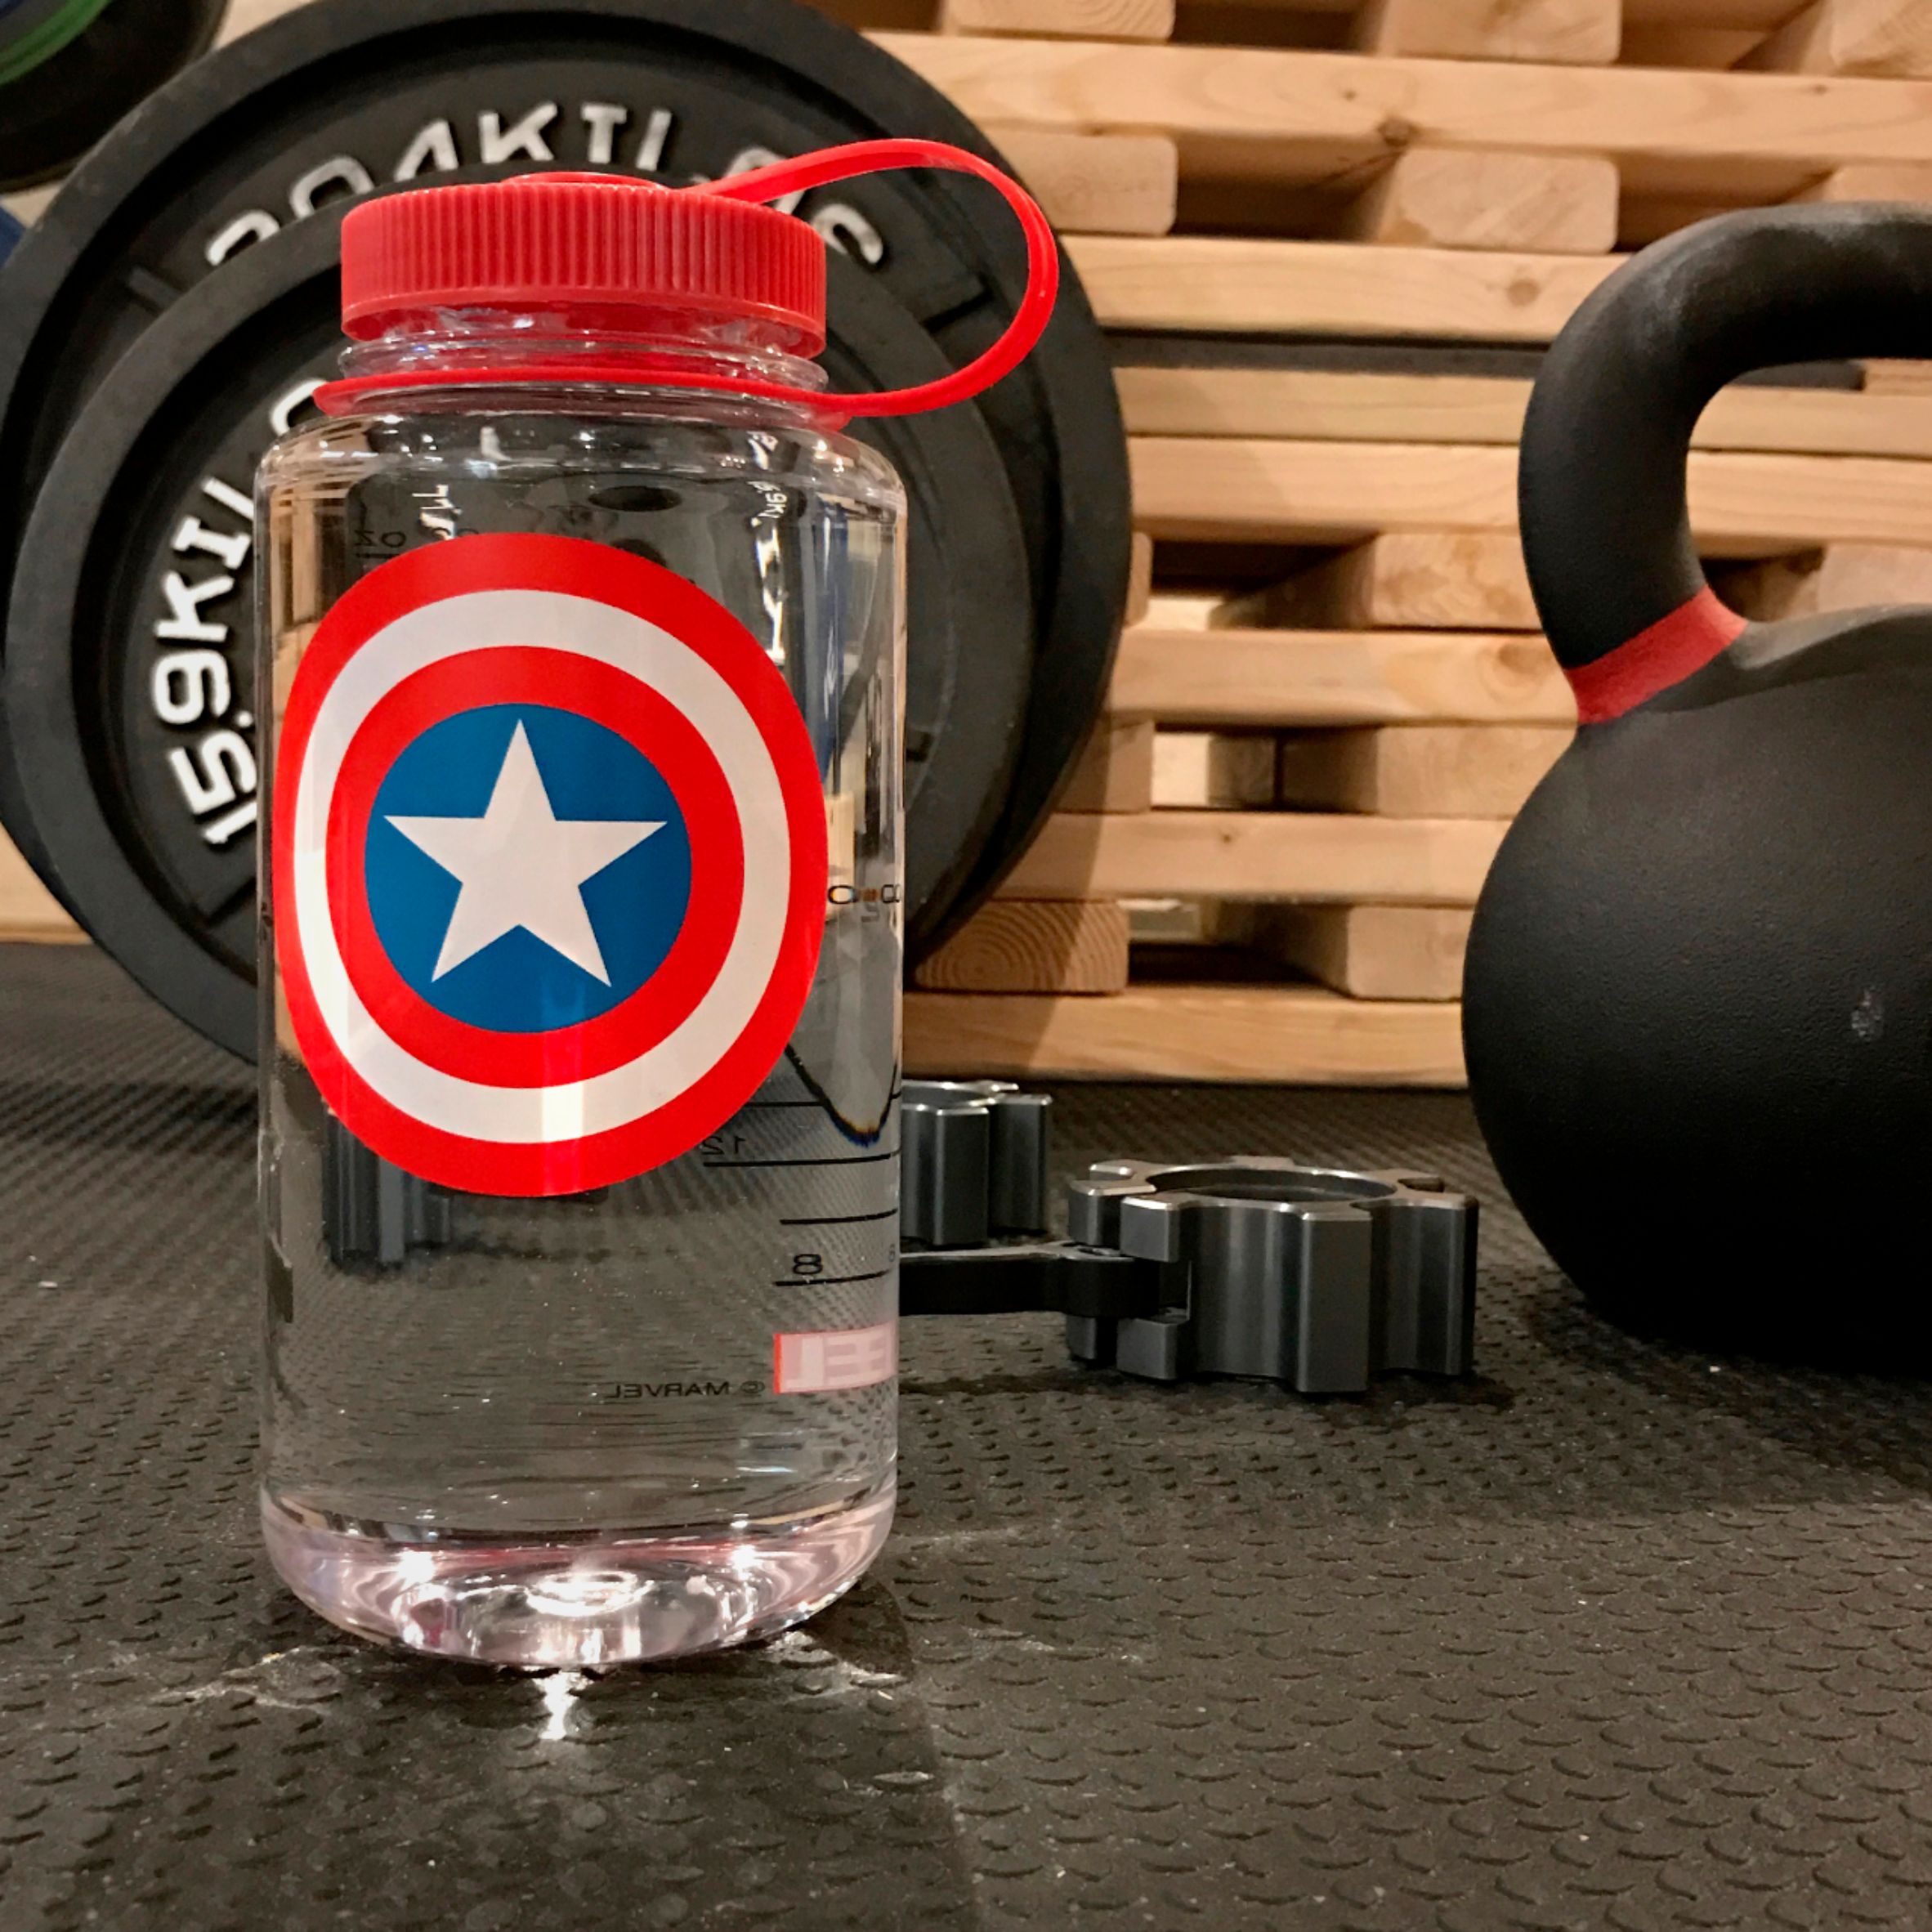 Captain America Marvel 18 oz. Tritan Water Bottle